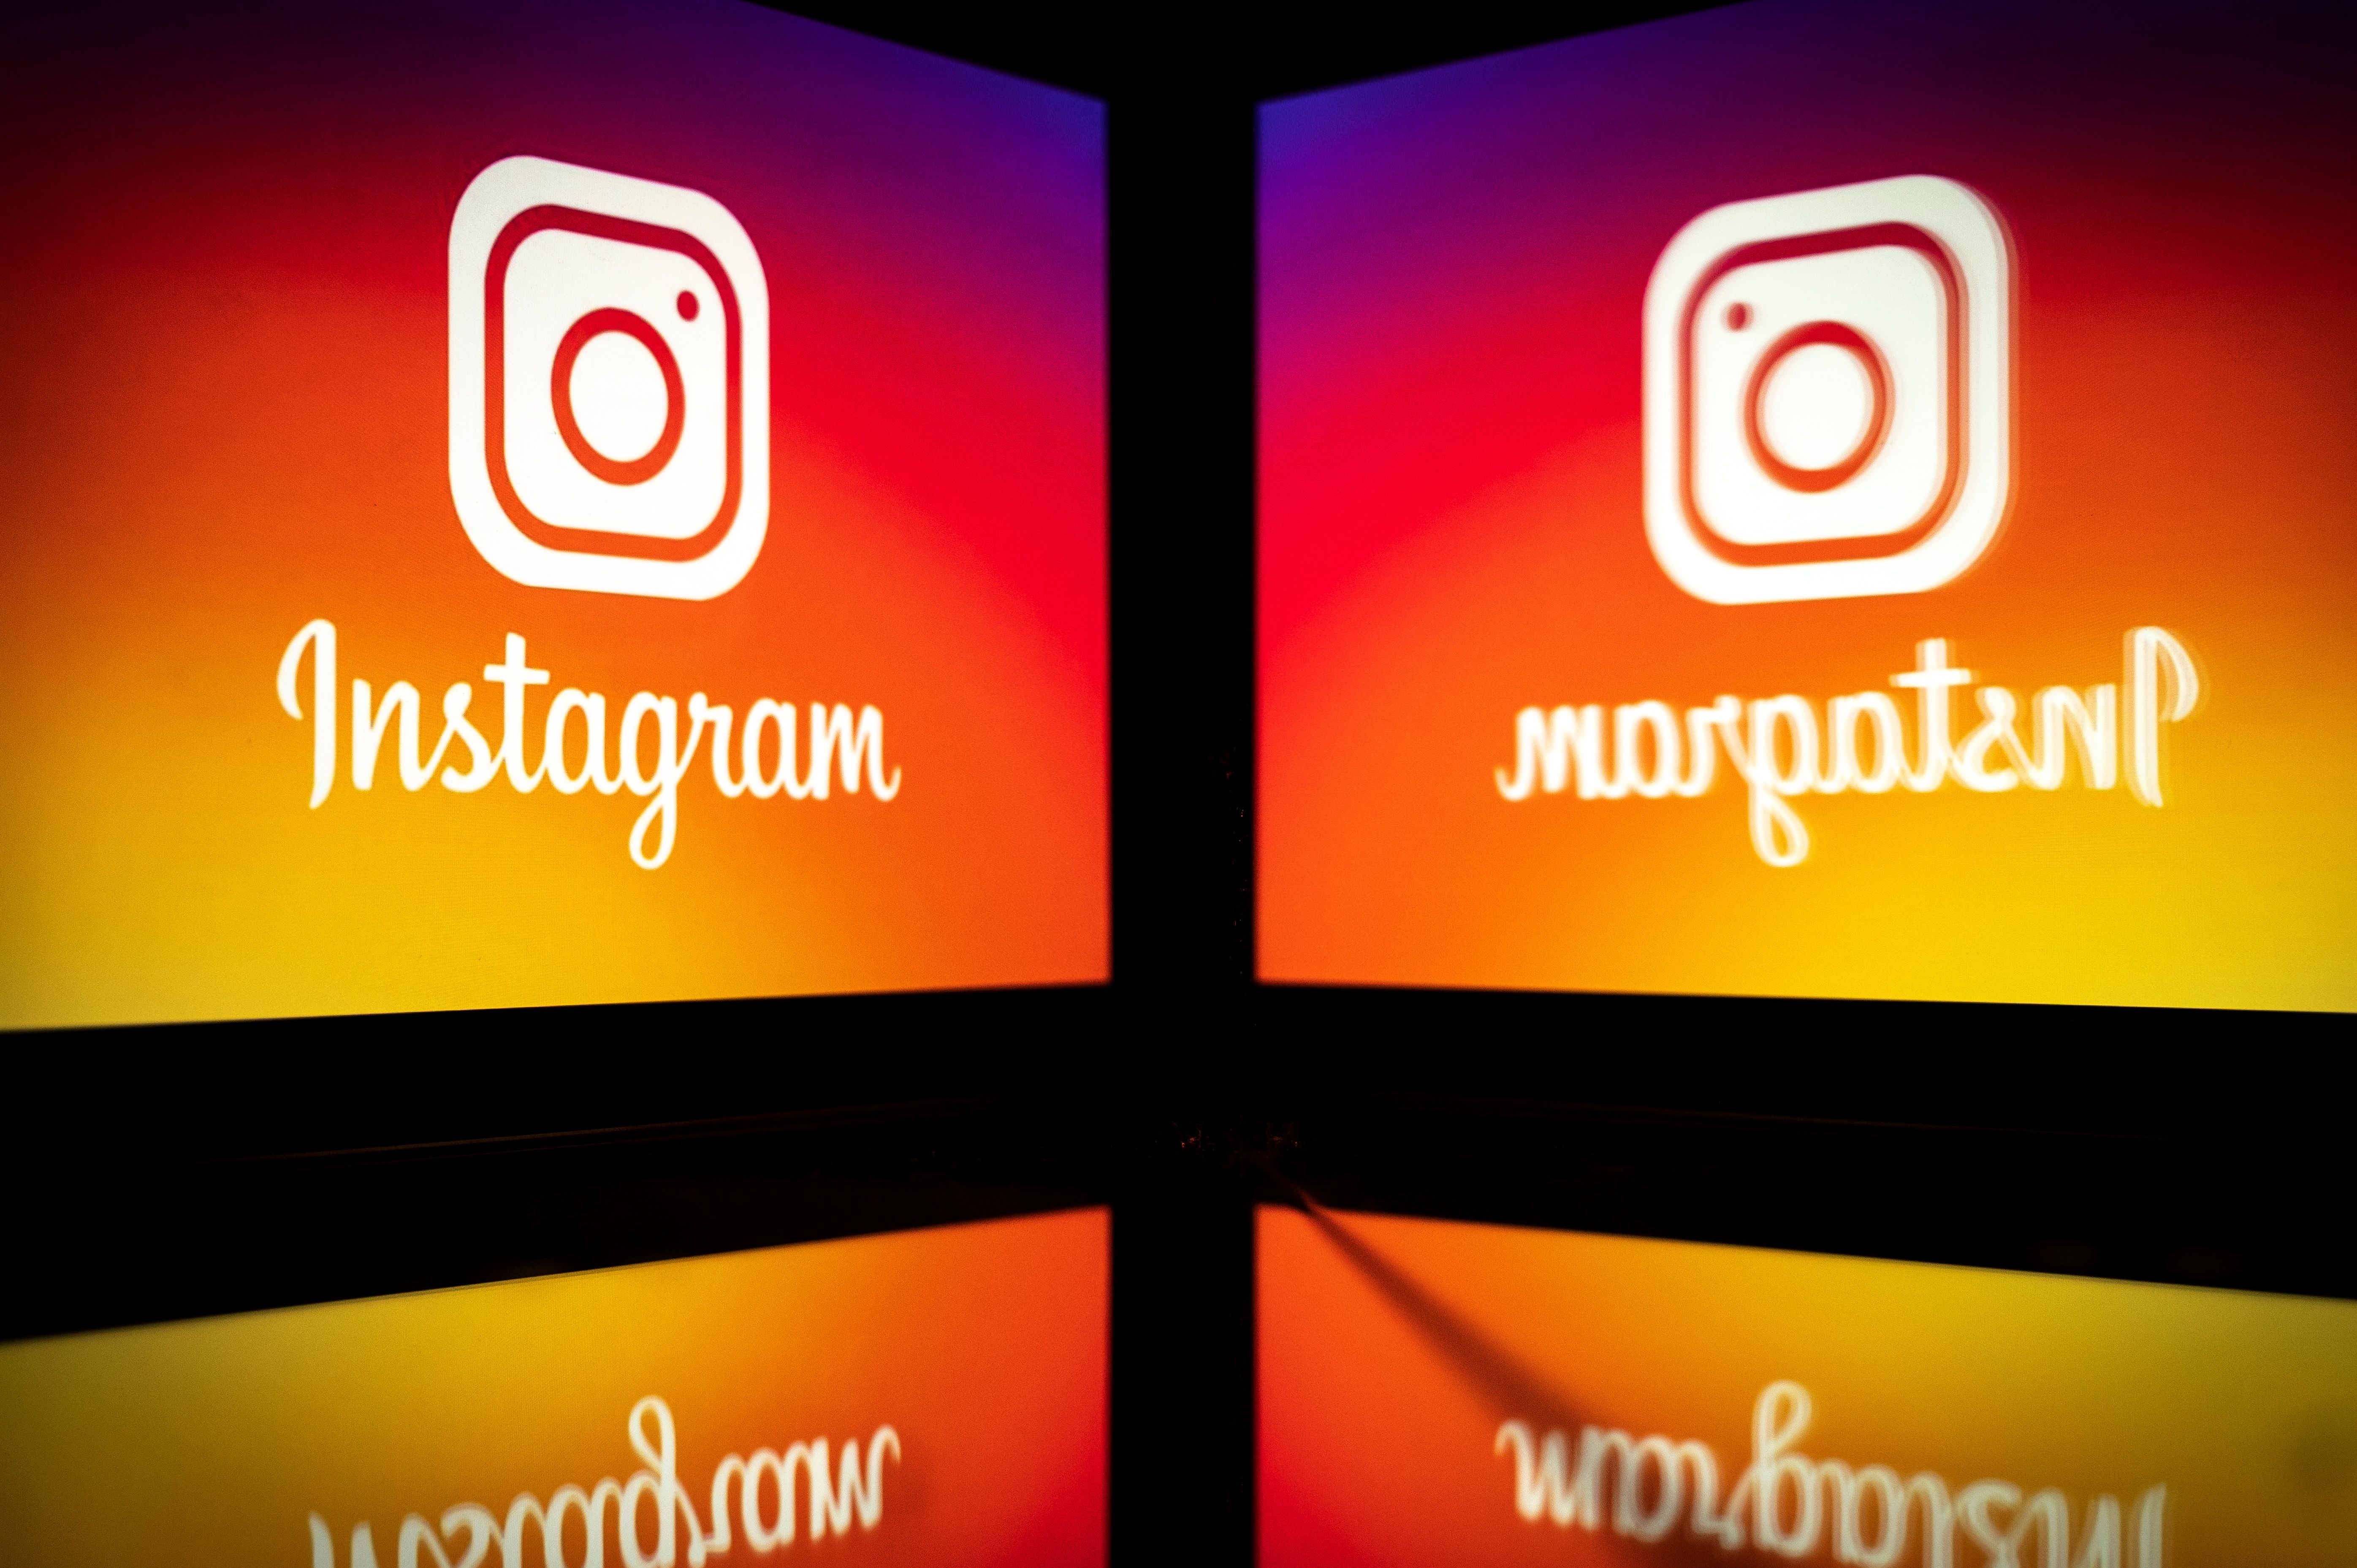 Instagram logo reflected